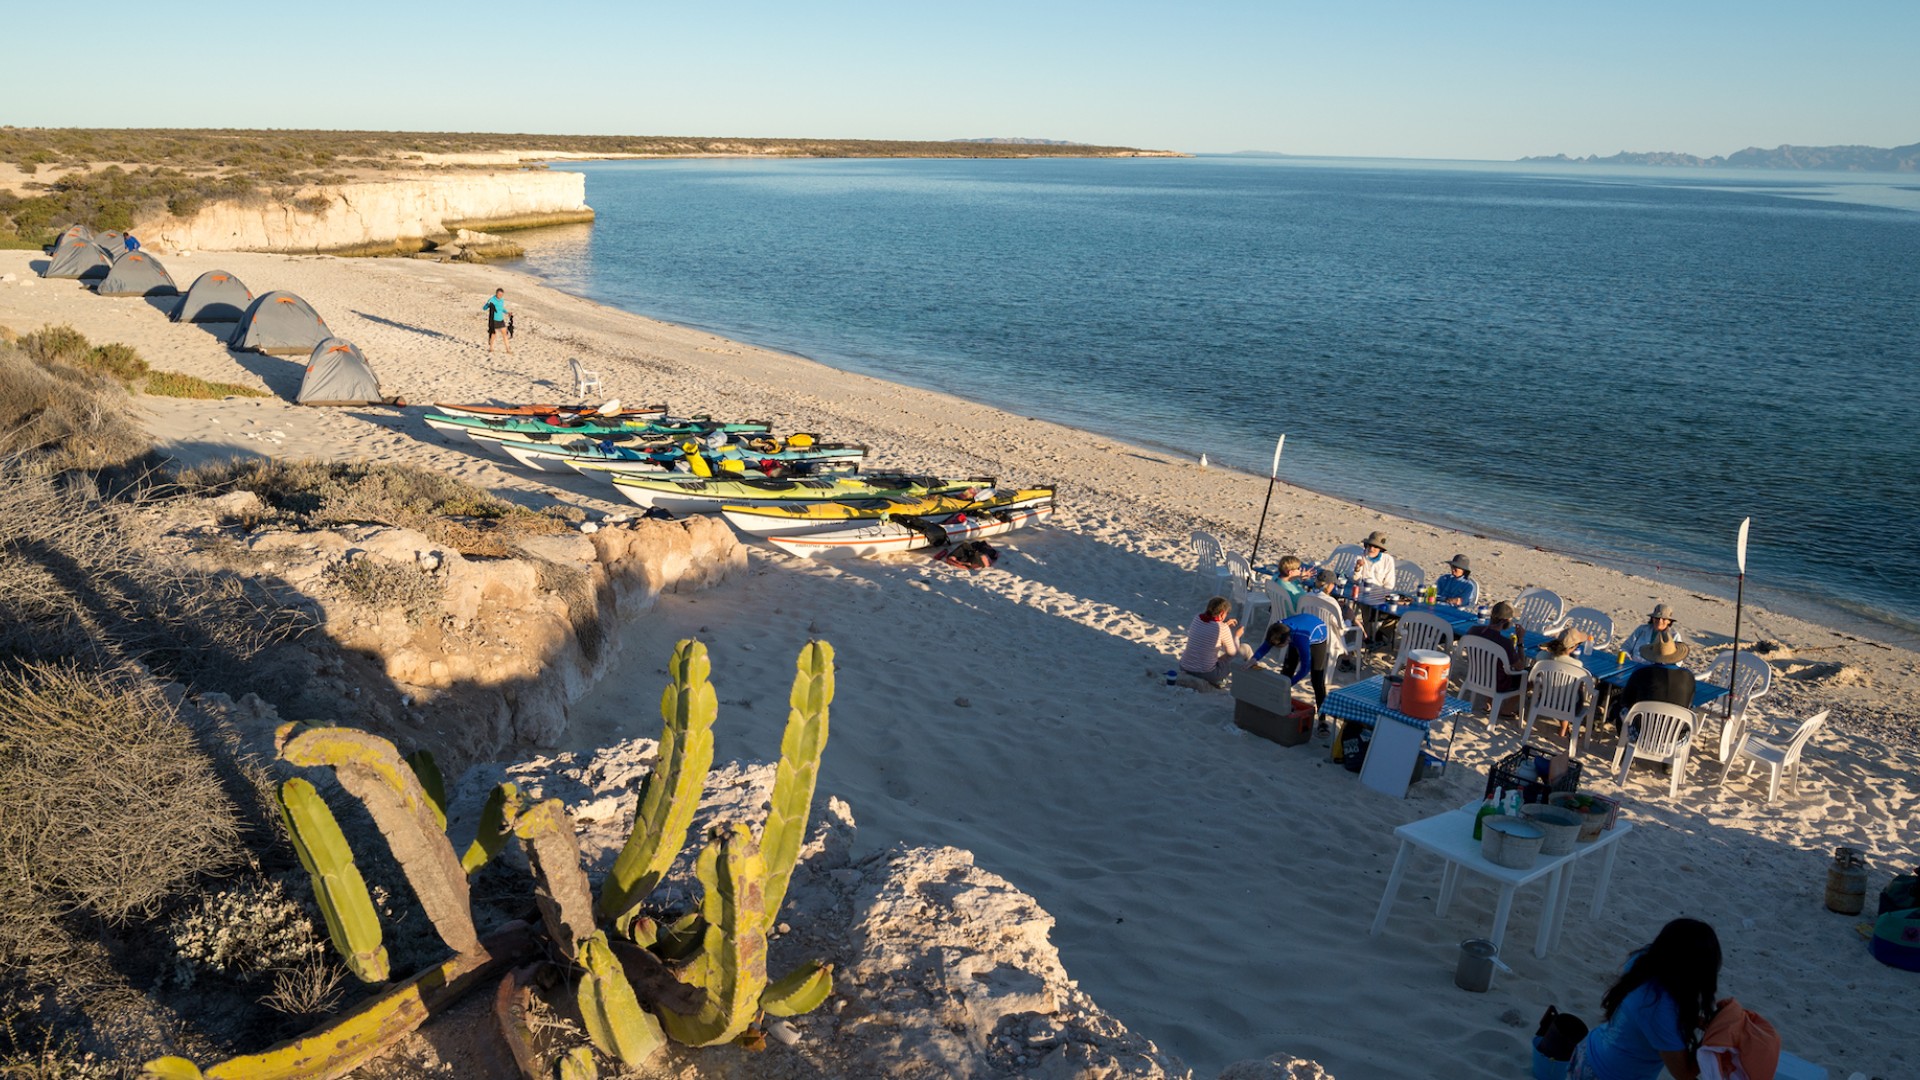 Beach camping set up in Baja California Sur